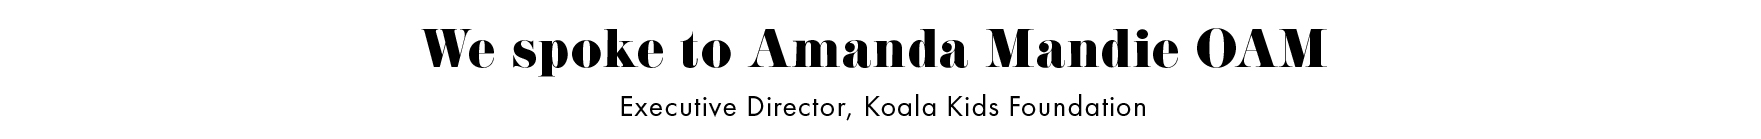 We spoke to Amanda Mandie OAM